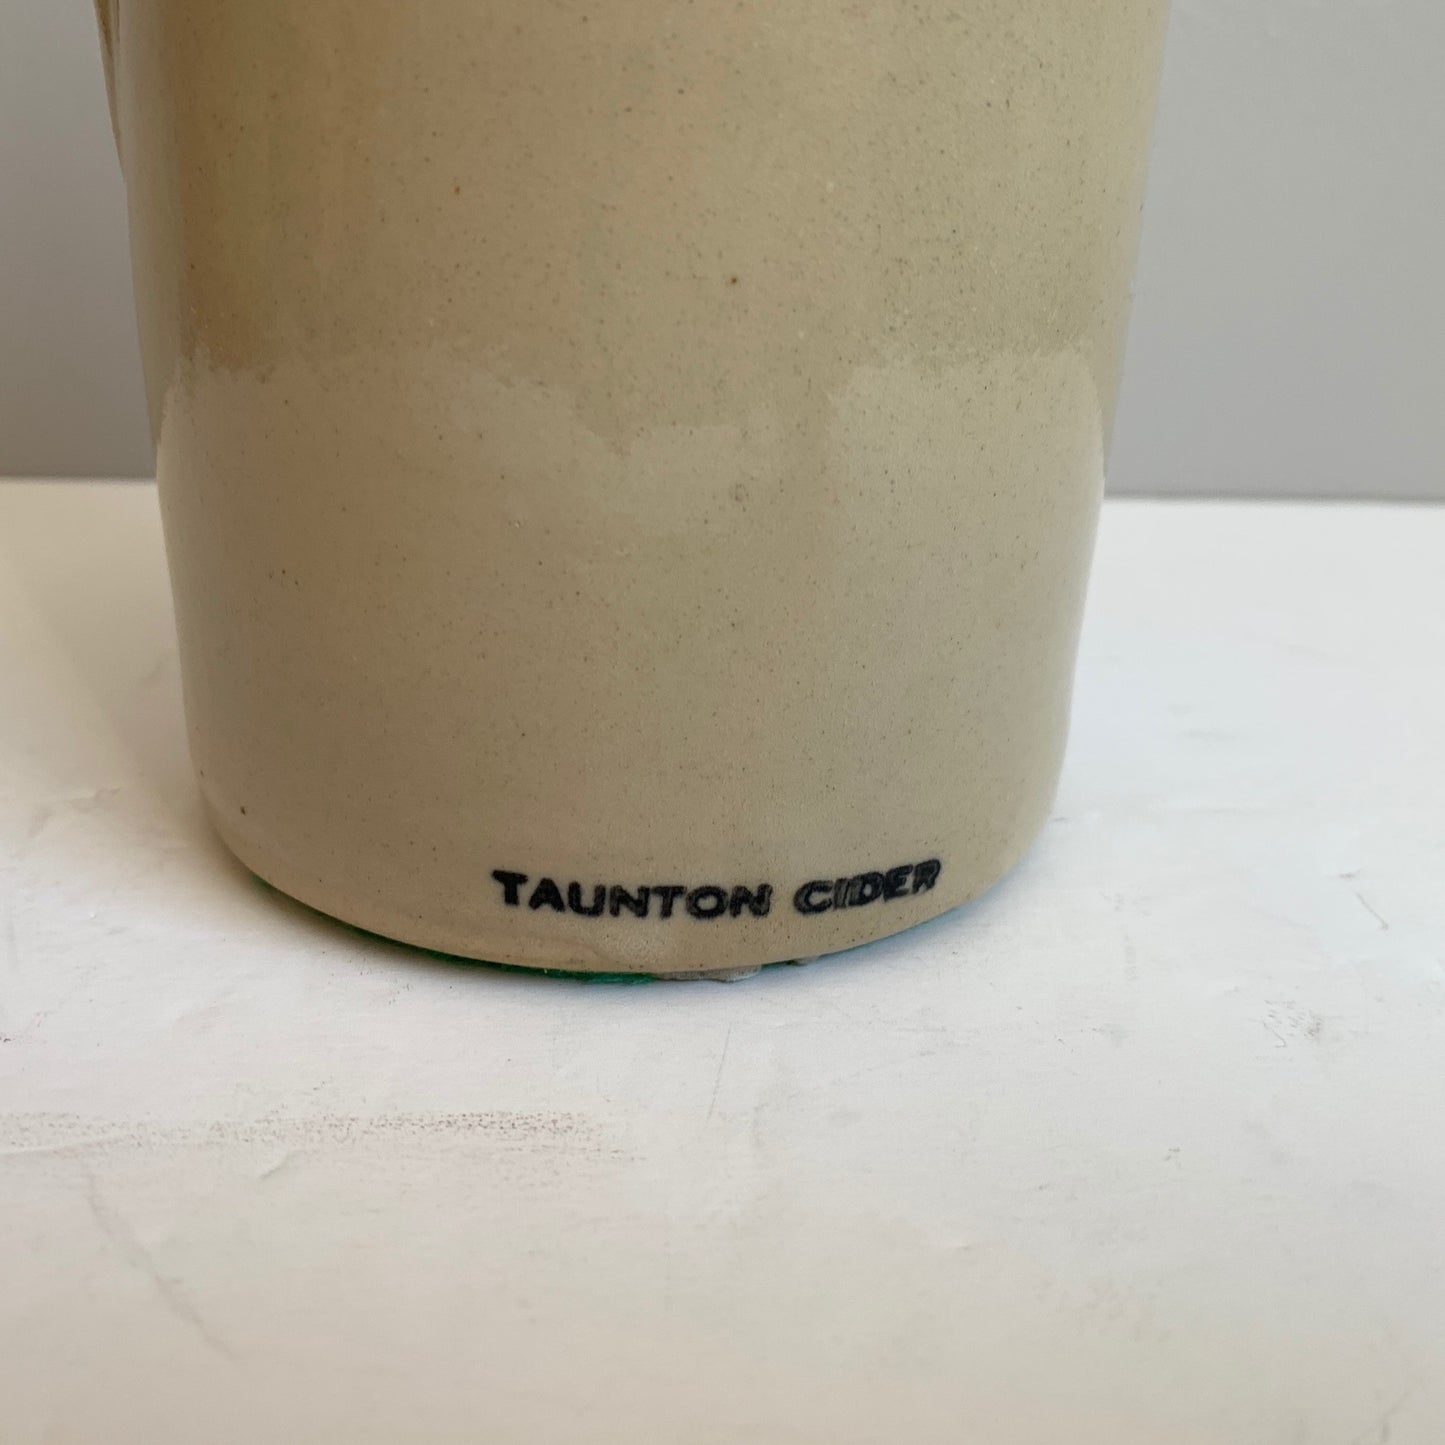 Vintage Taunton Cider Breweriana Advertising Jug Jar